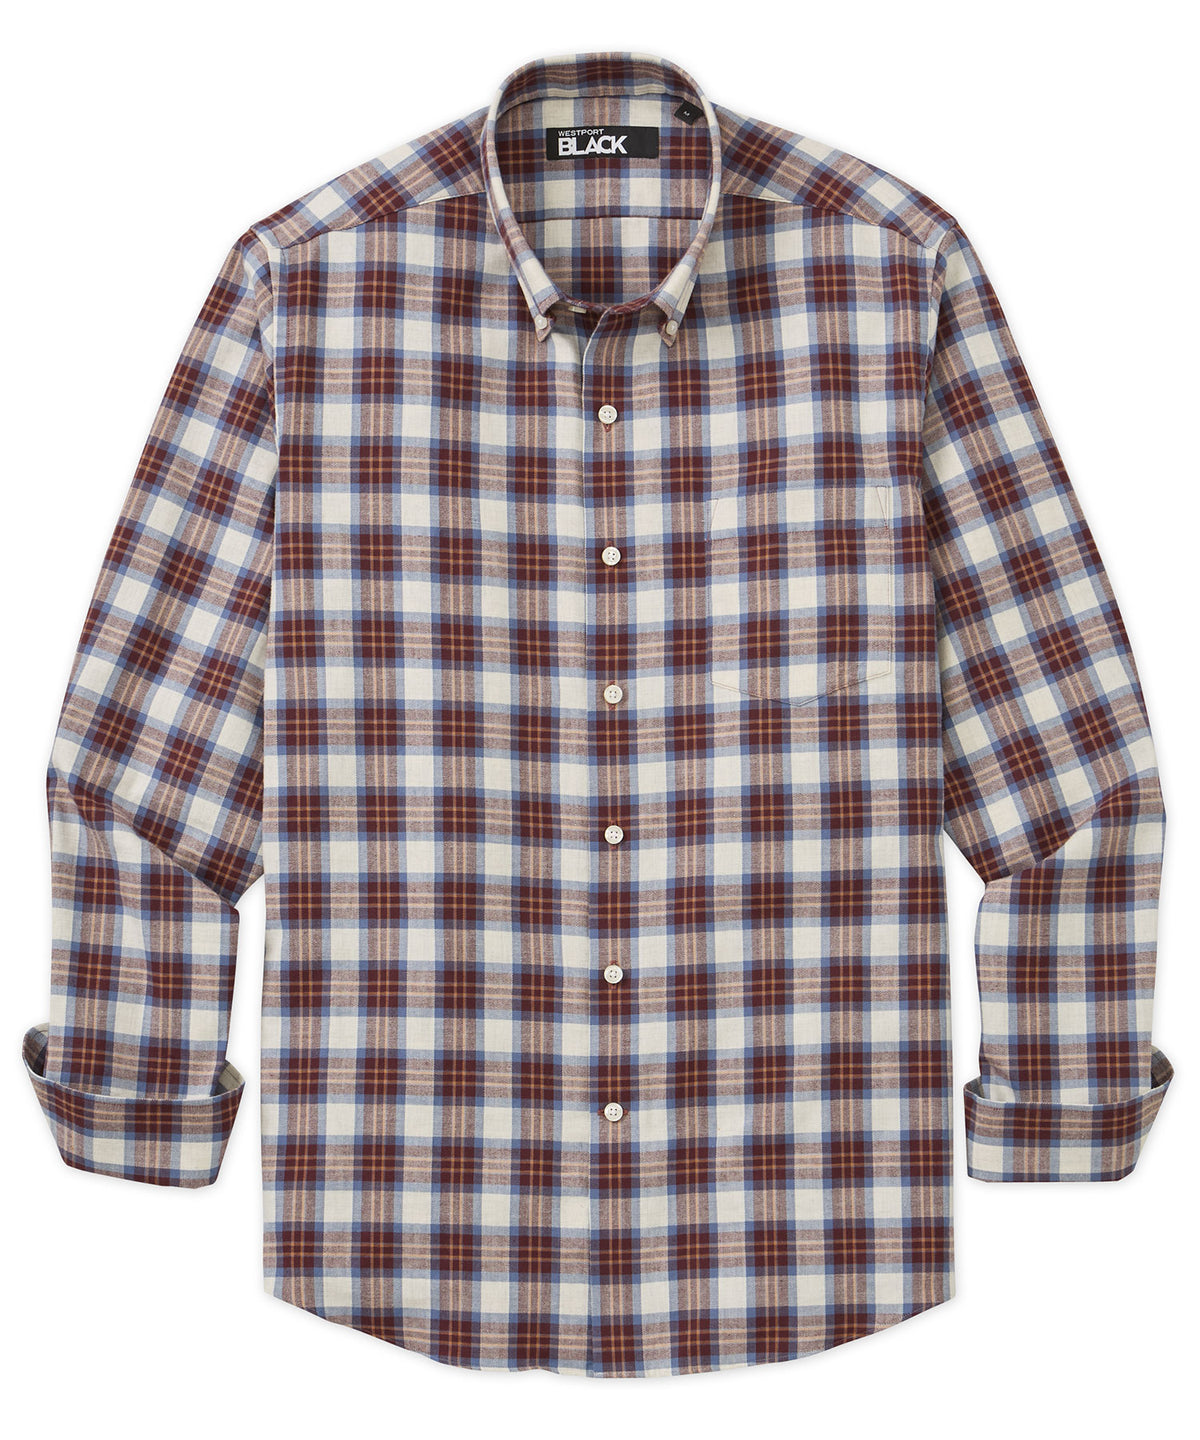 Westport Black Long Sleeve Soft Wash Flannel Sport Shirt, Big & Tall